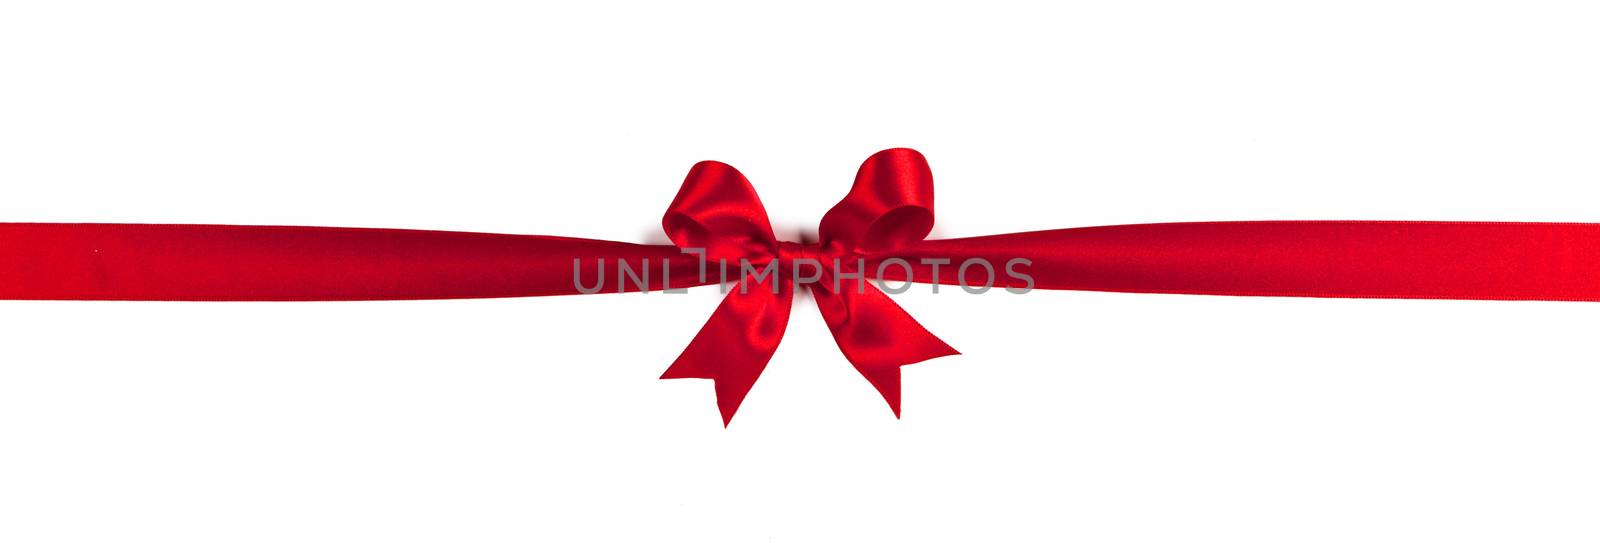 Elegant satin red ribbon bow isolated on white background